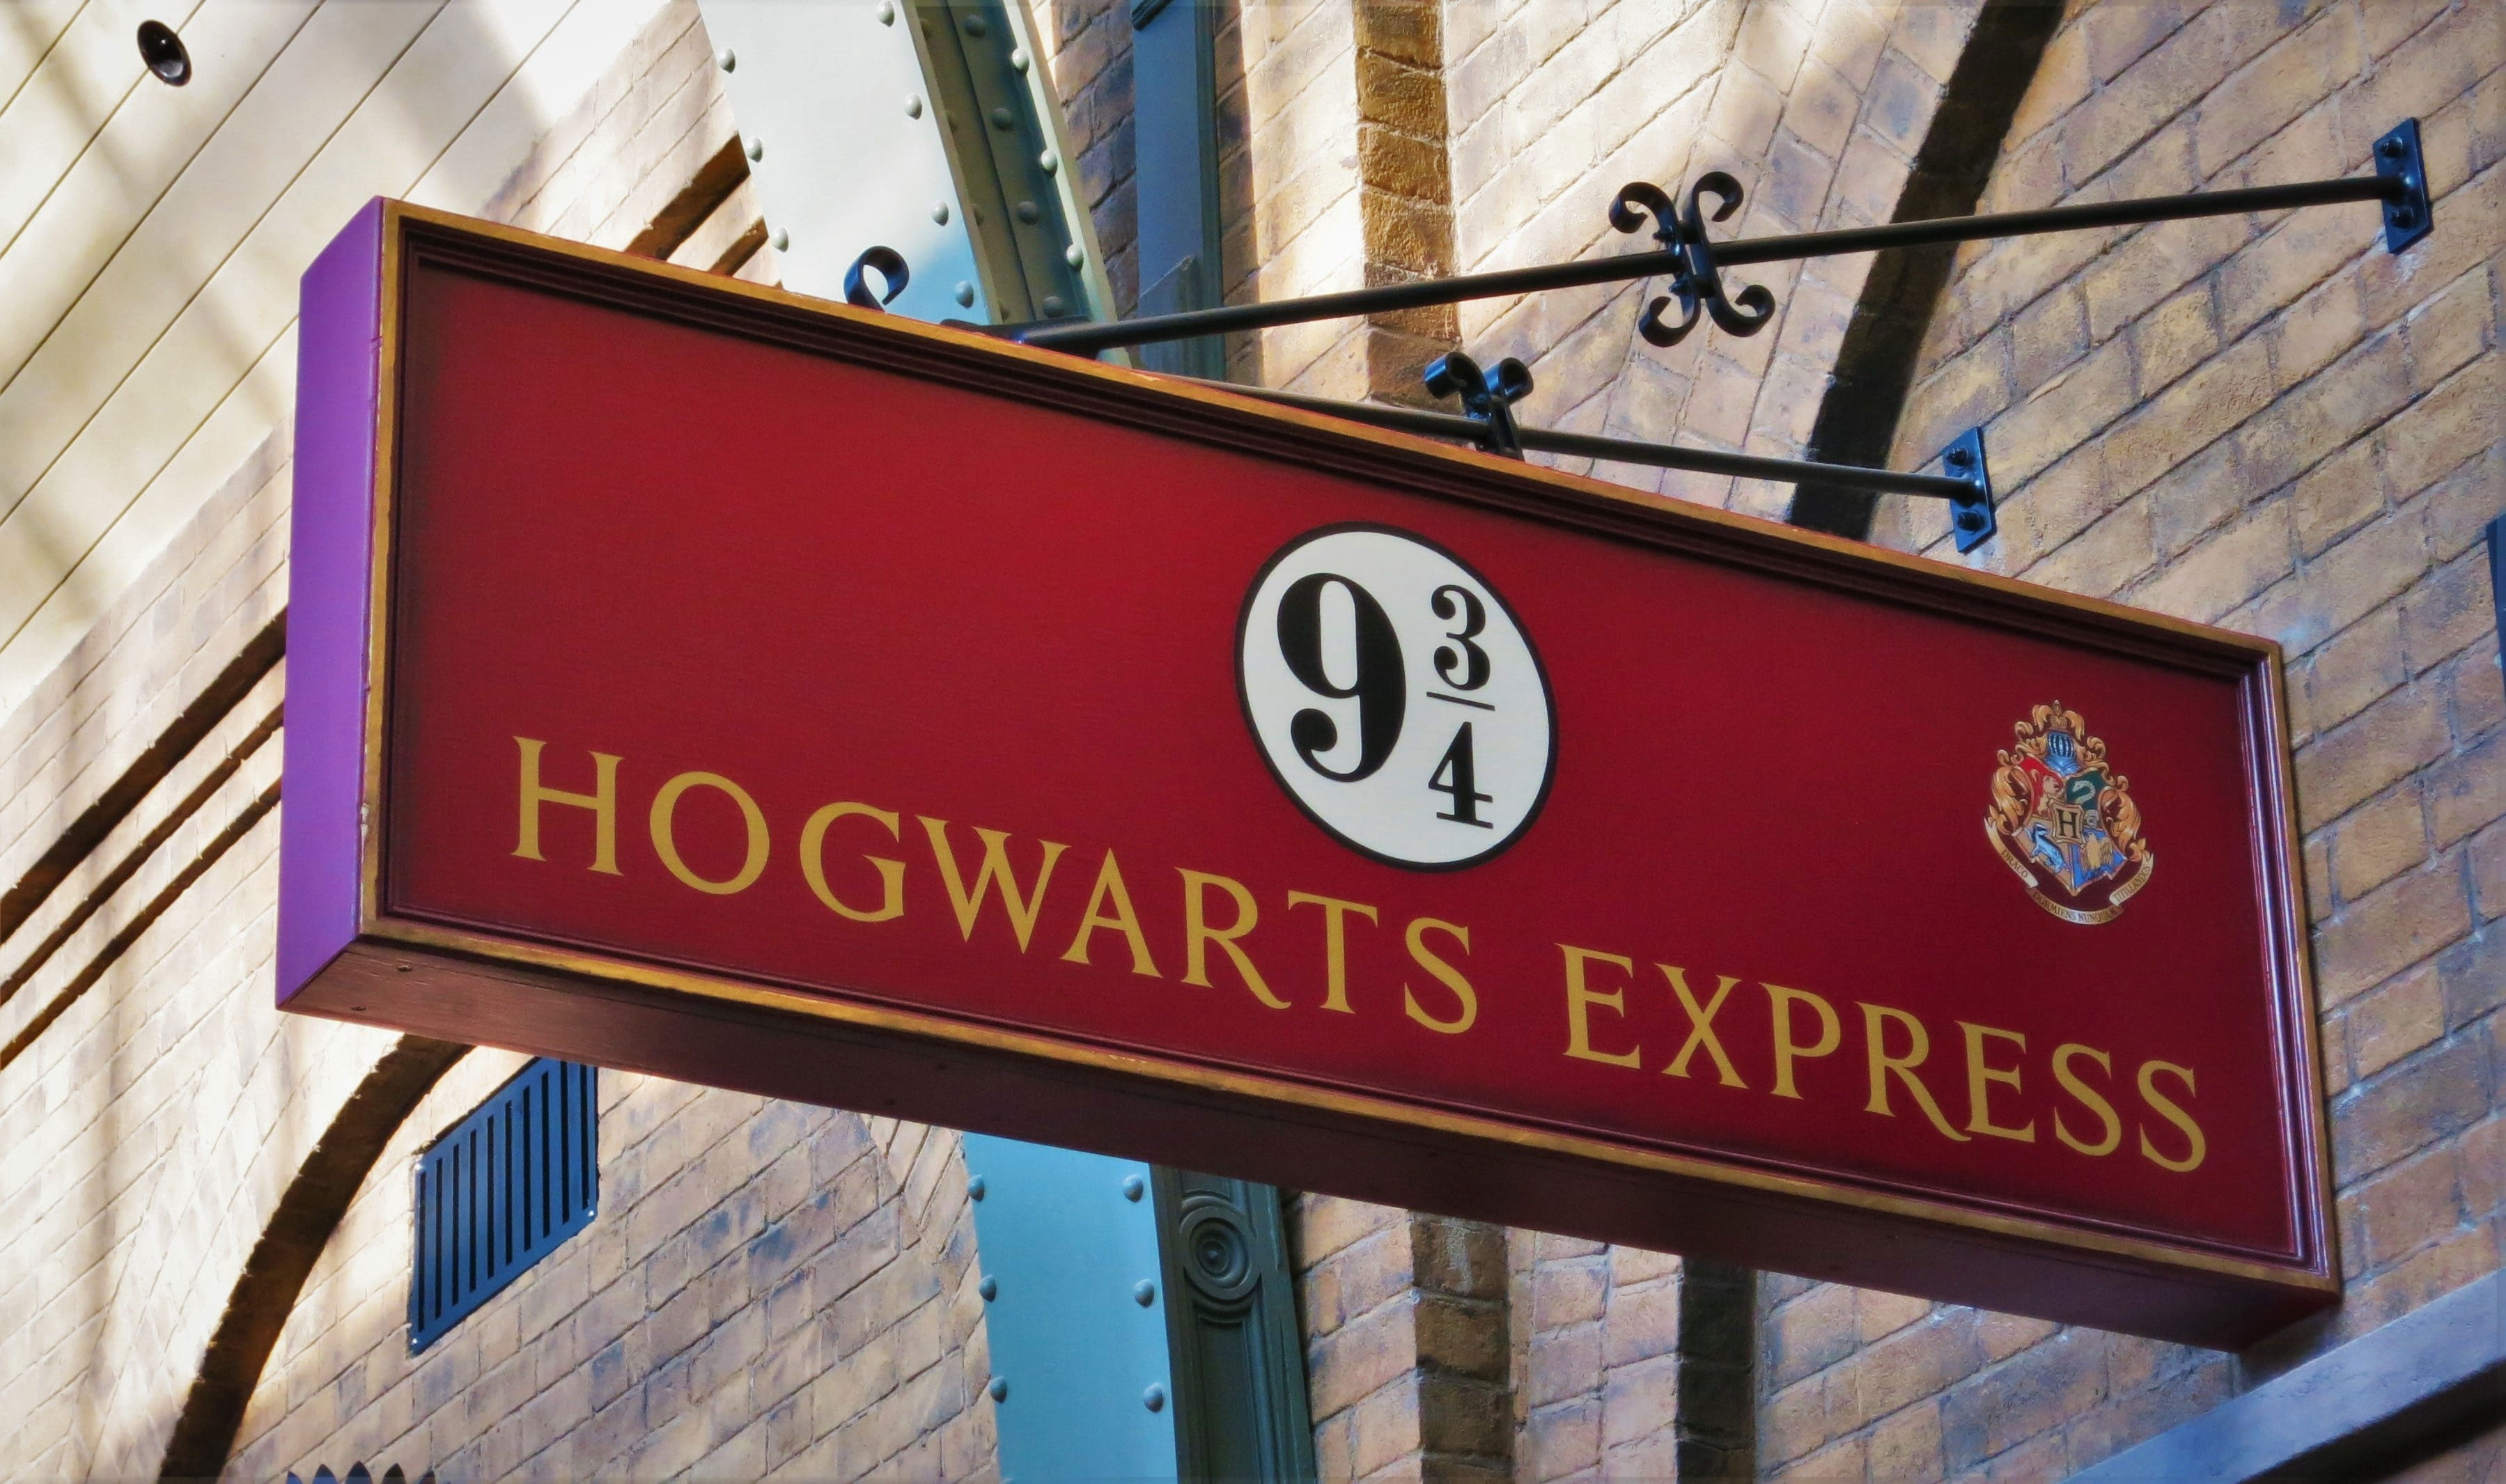 45+] Hogwarts Express Wallpaper - WallpaperSafari